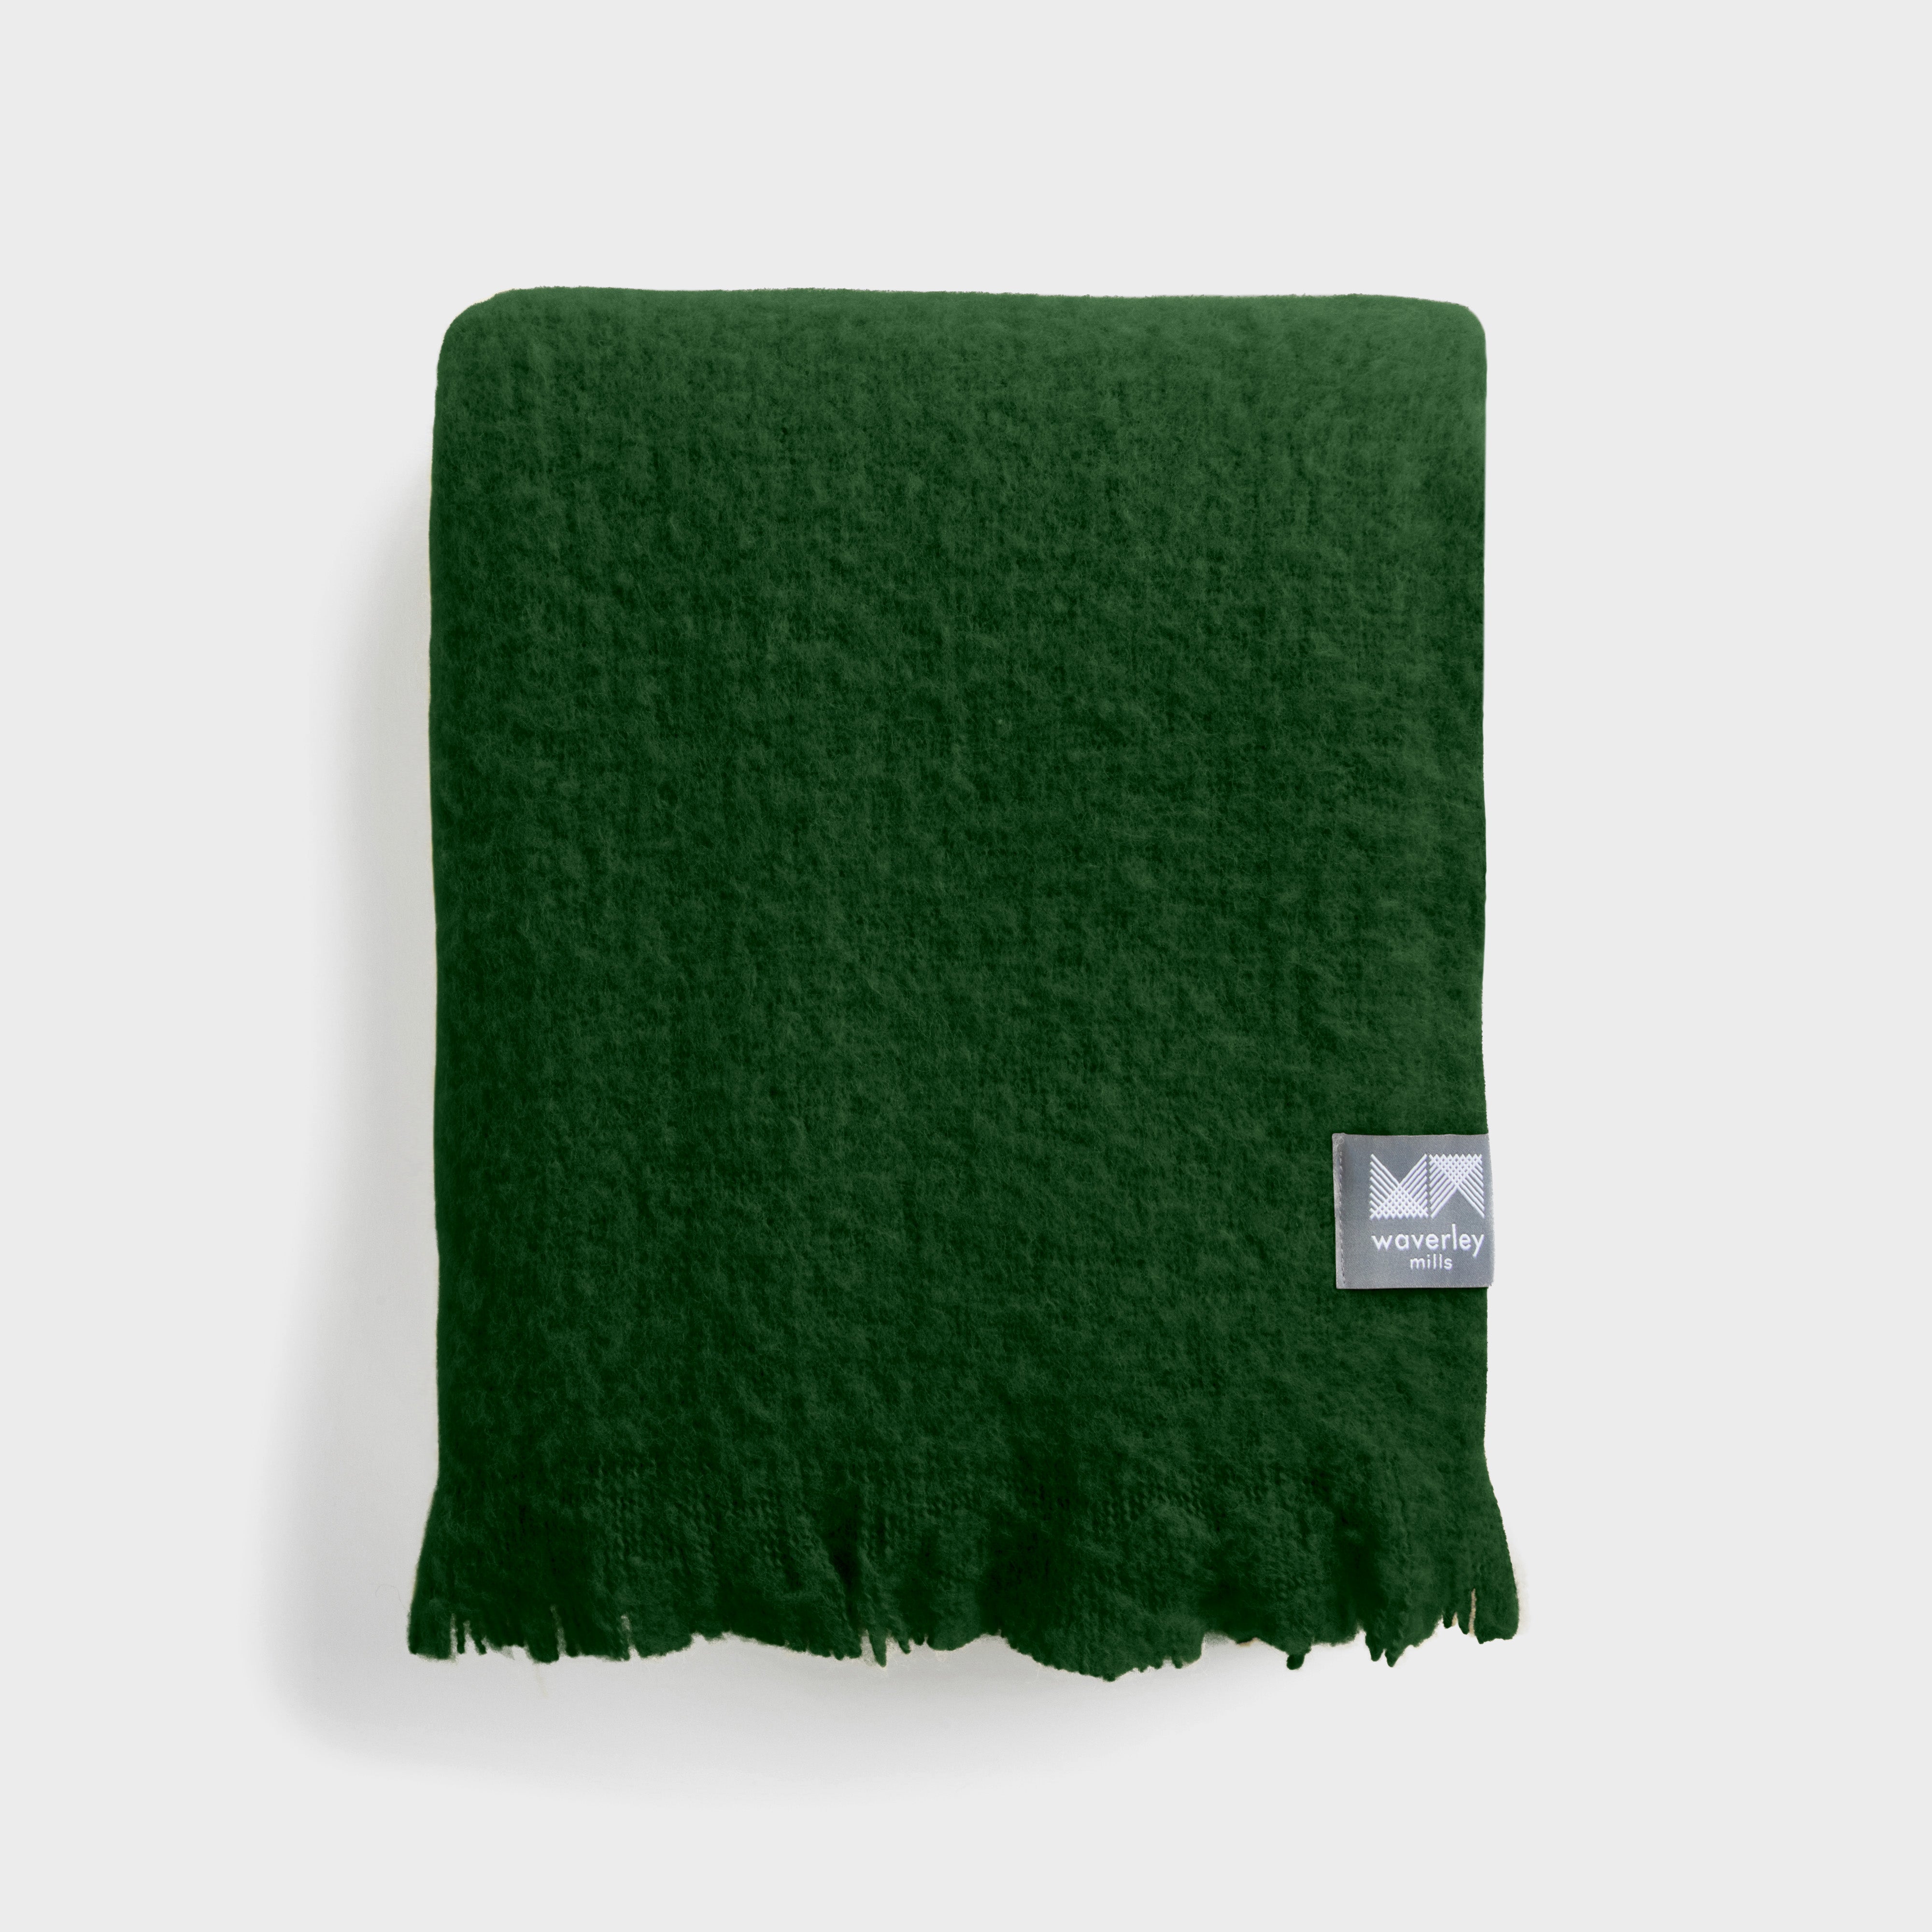 A plush folded green chroma throw.